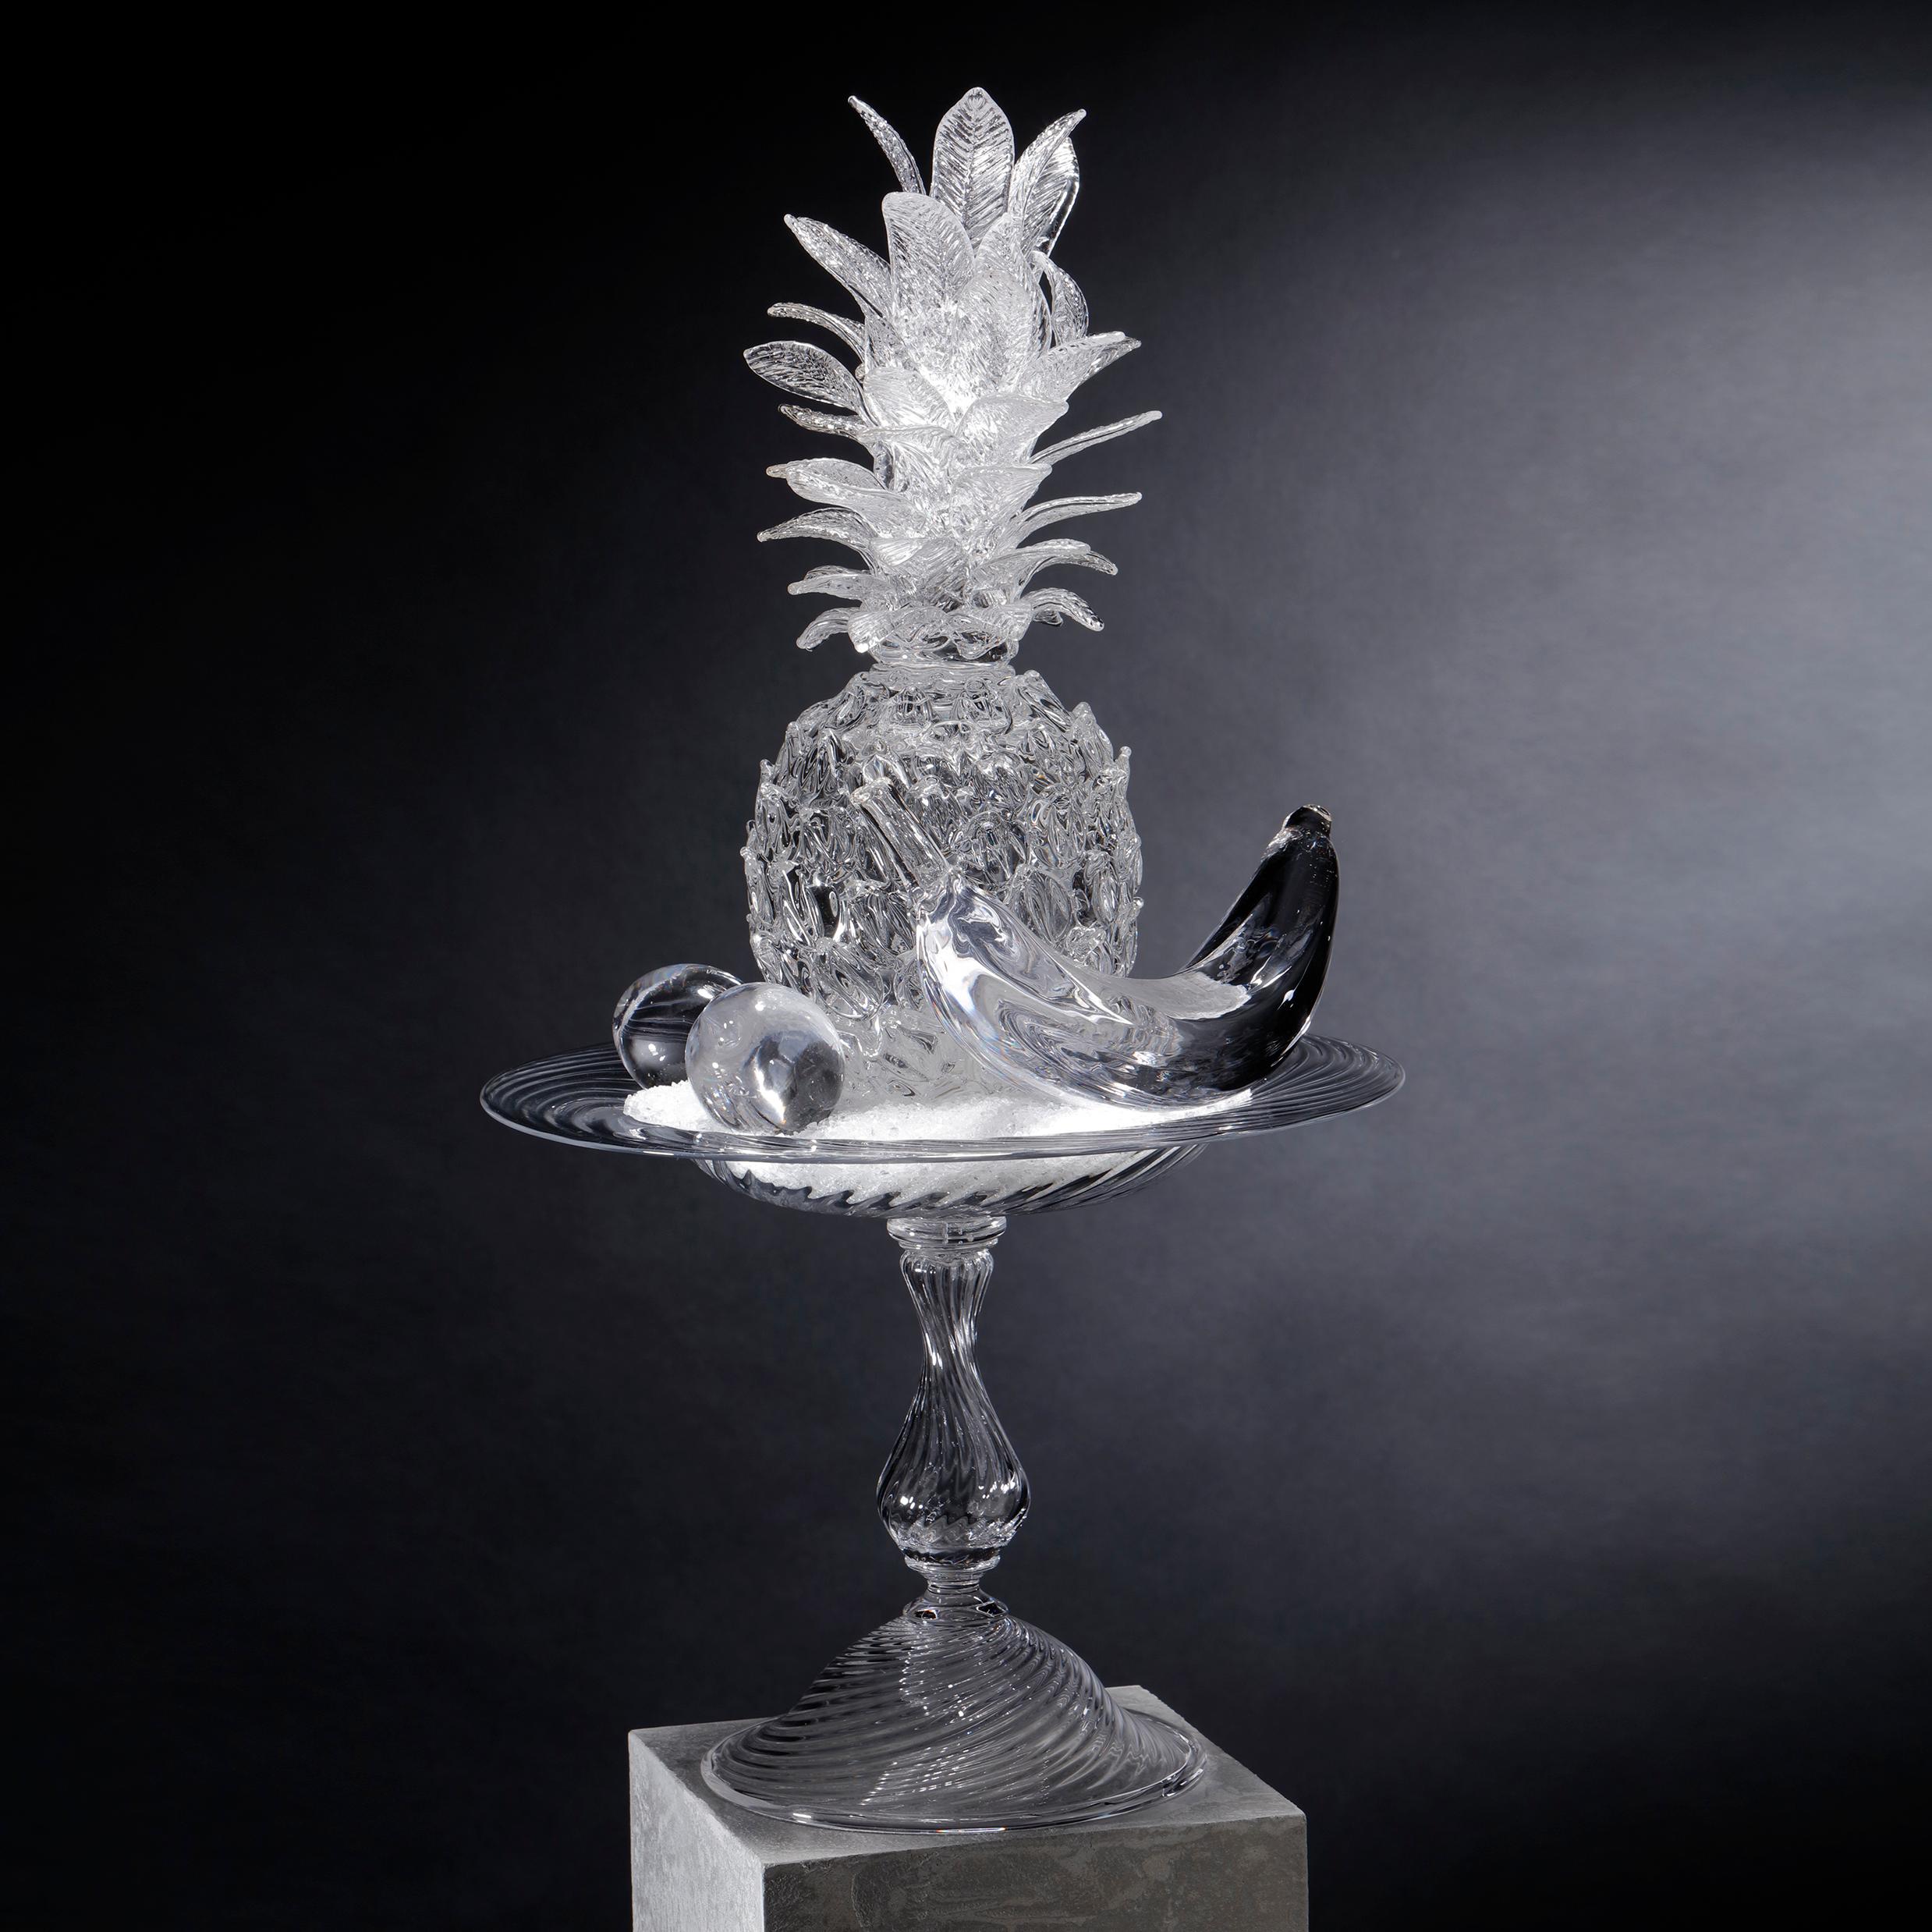 AnanasMusaPrunus, a Glass Still Life Installation Art Work by Elliot Walker For Sale 1